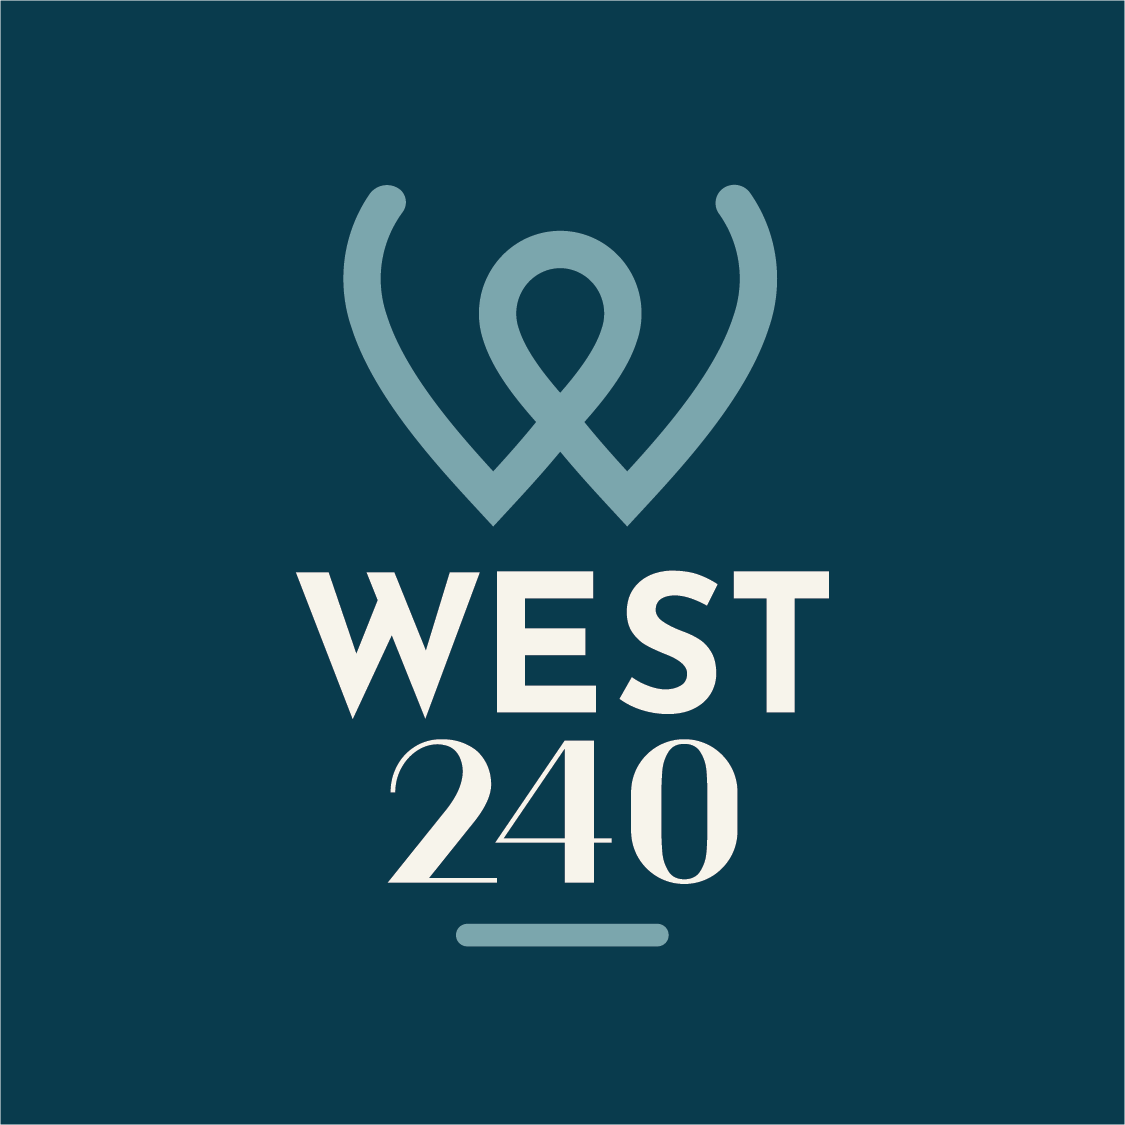 West 240